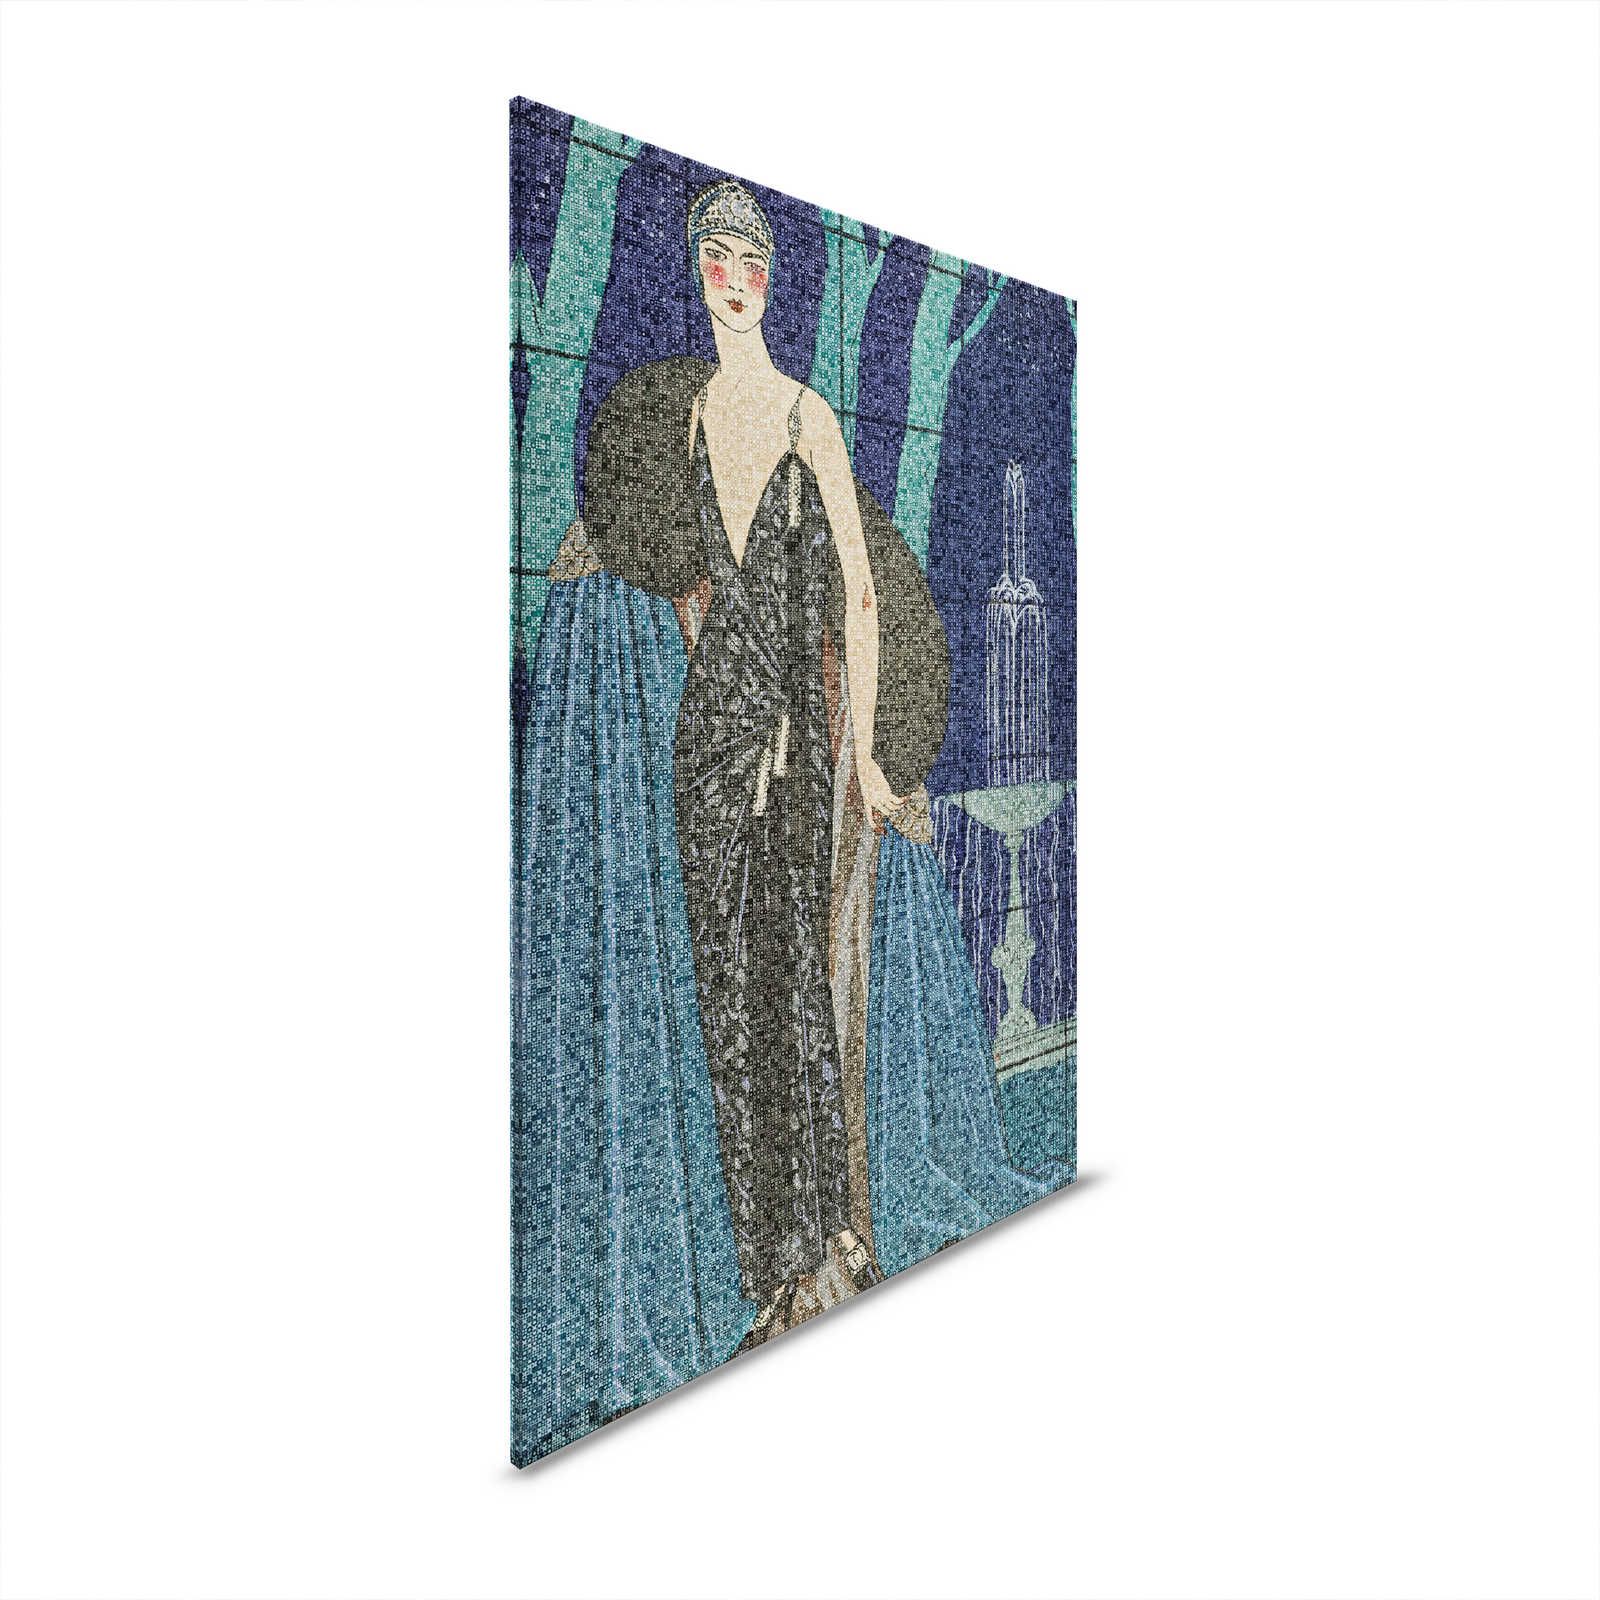 Scala 3 - Art Deco Canvas schilderij elegant vrouwenmotief - 0,80 m x 1,20 m
